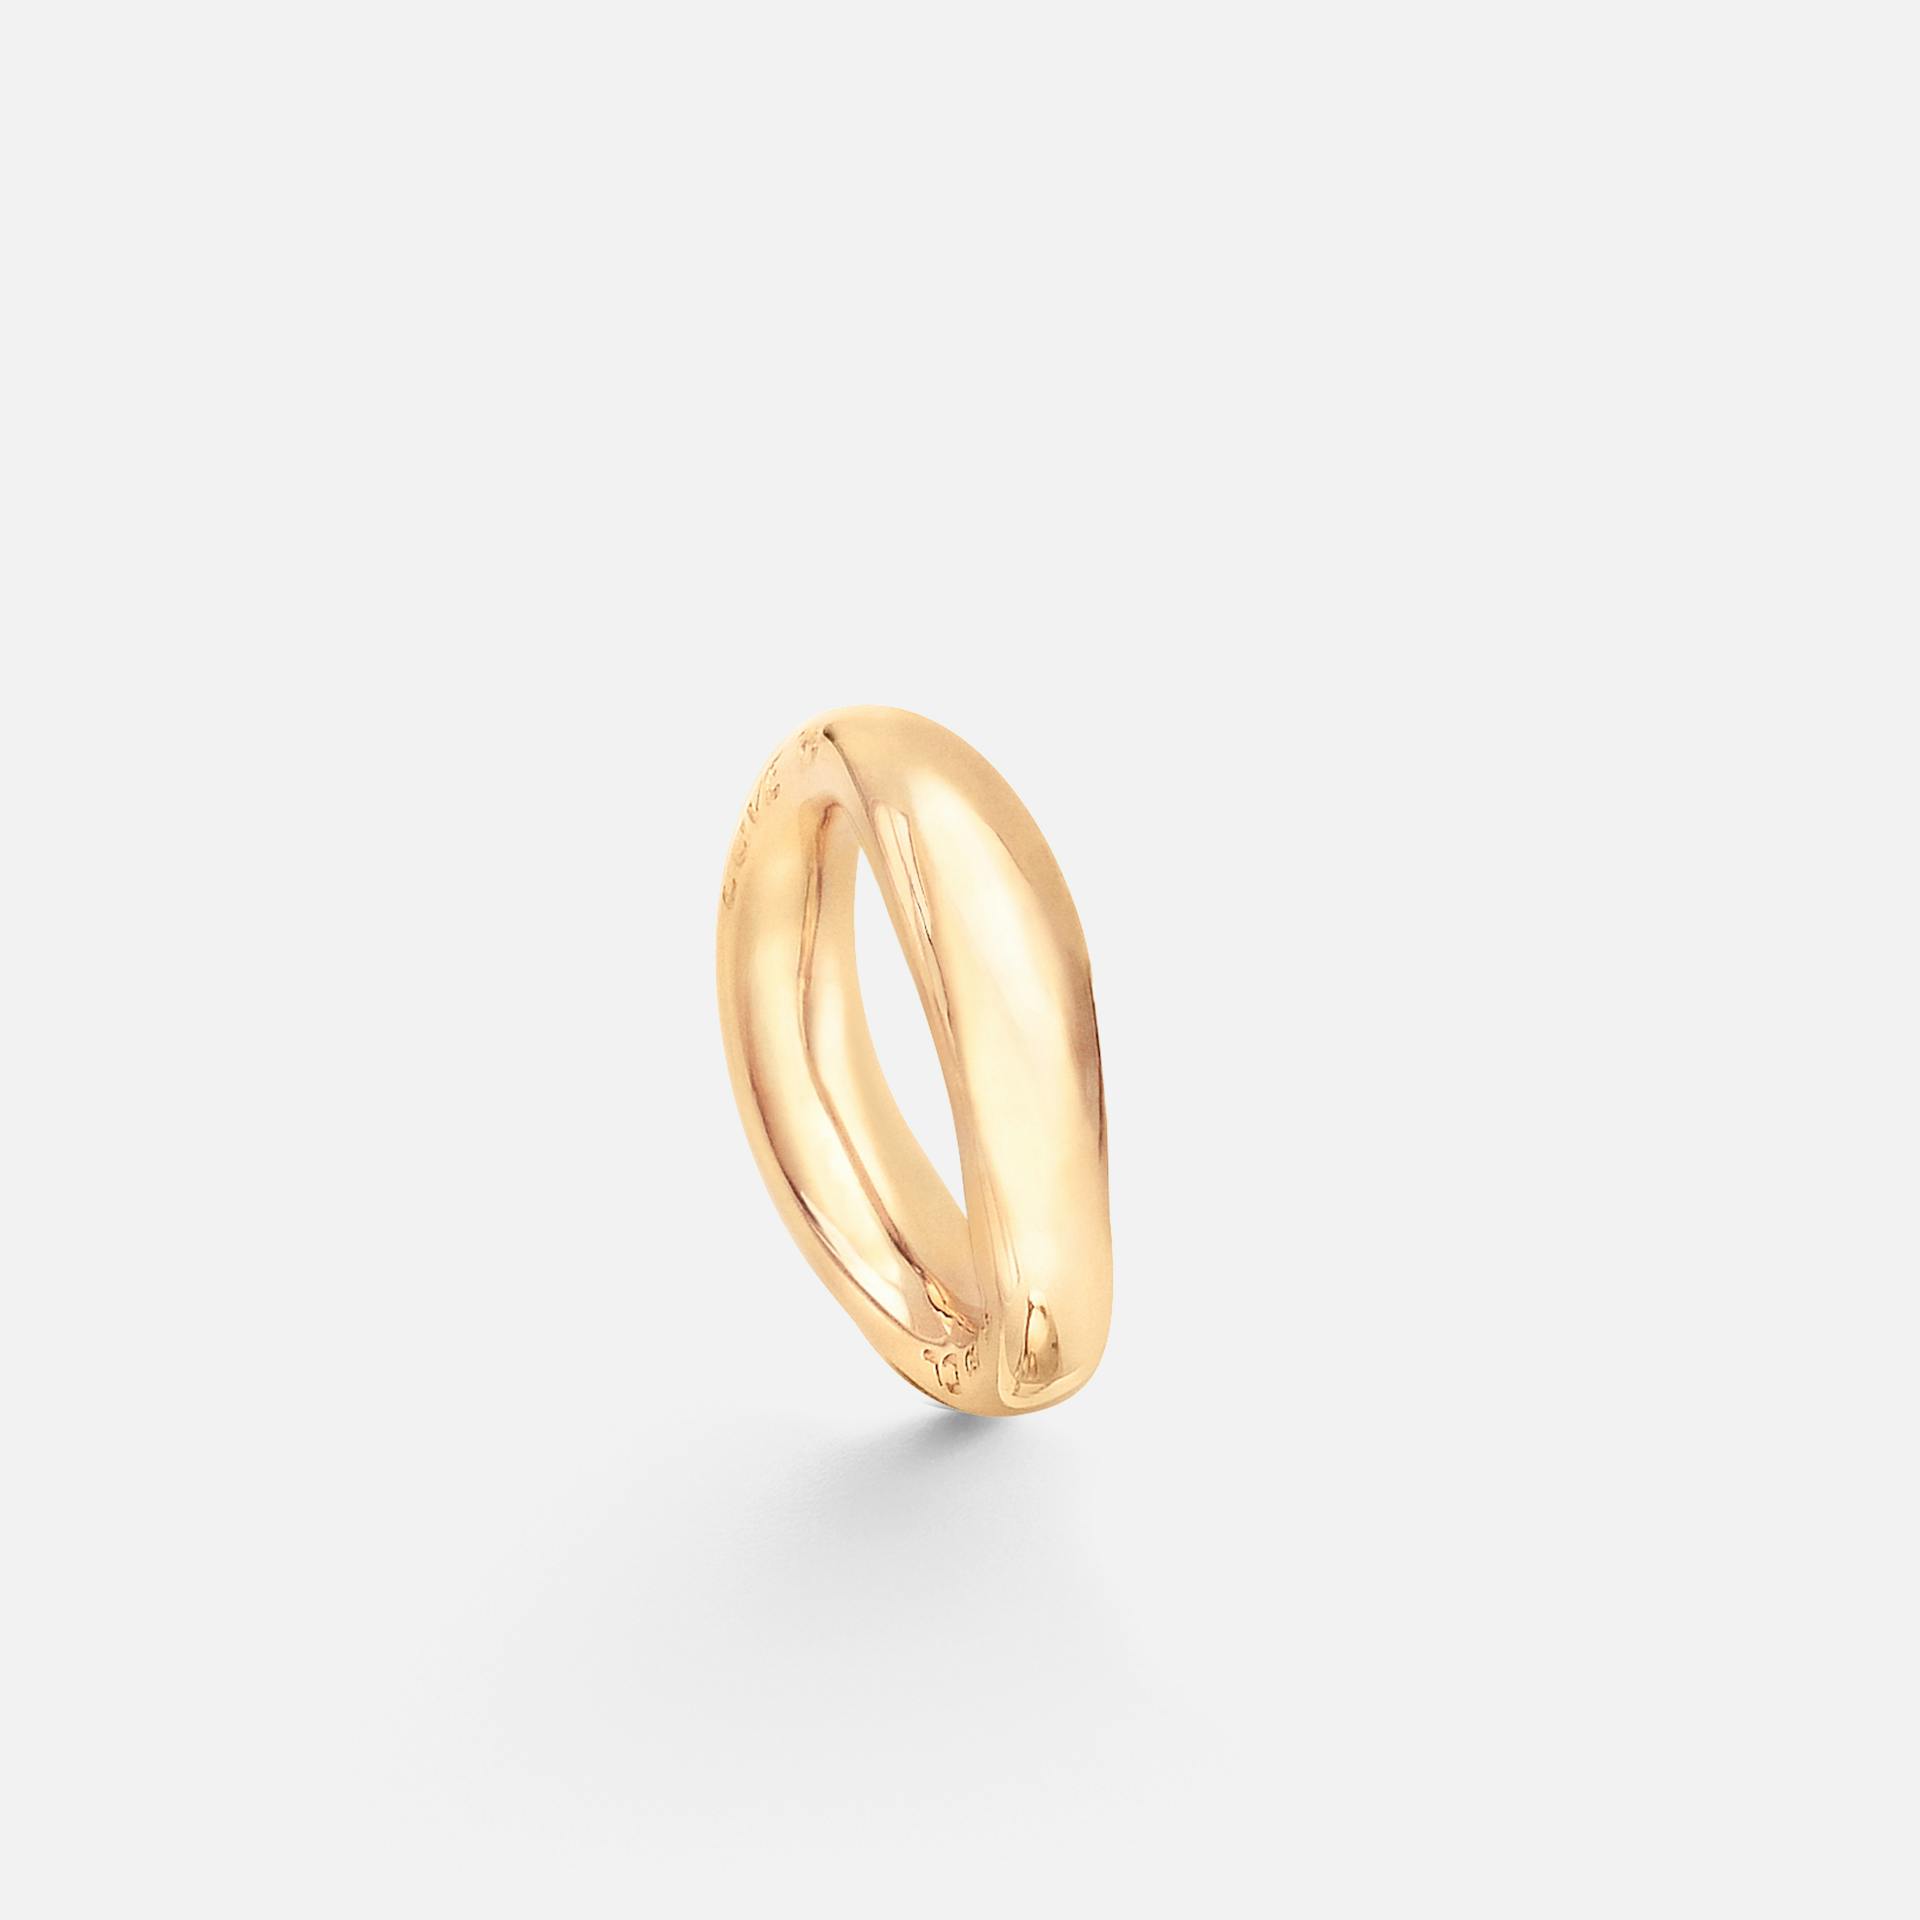 Love ring 5 18k gold polished